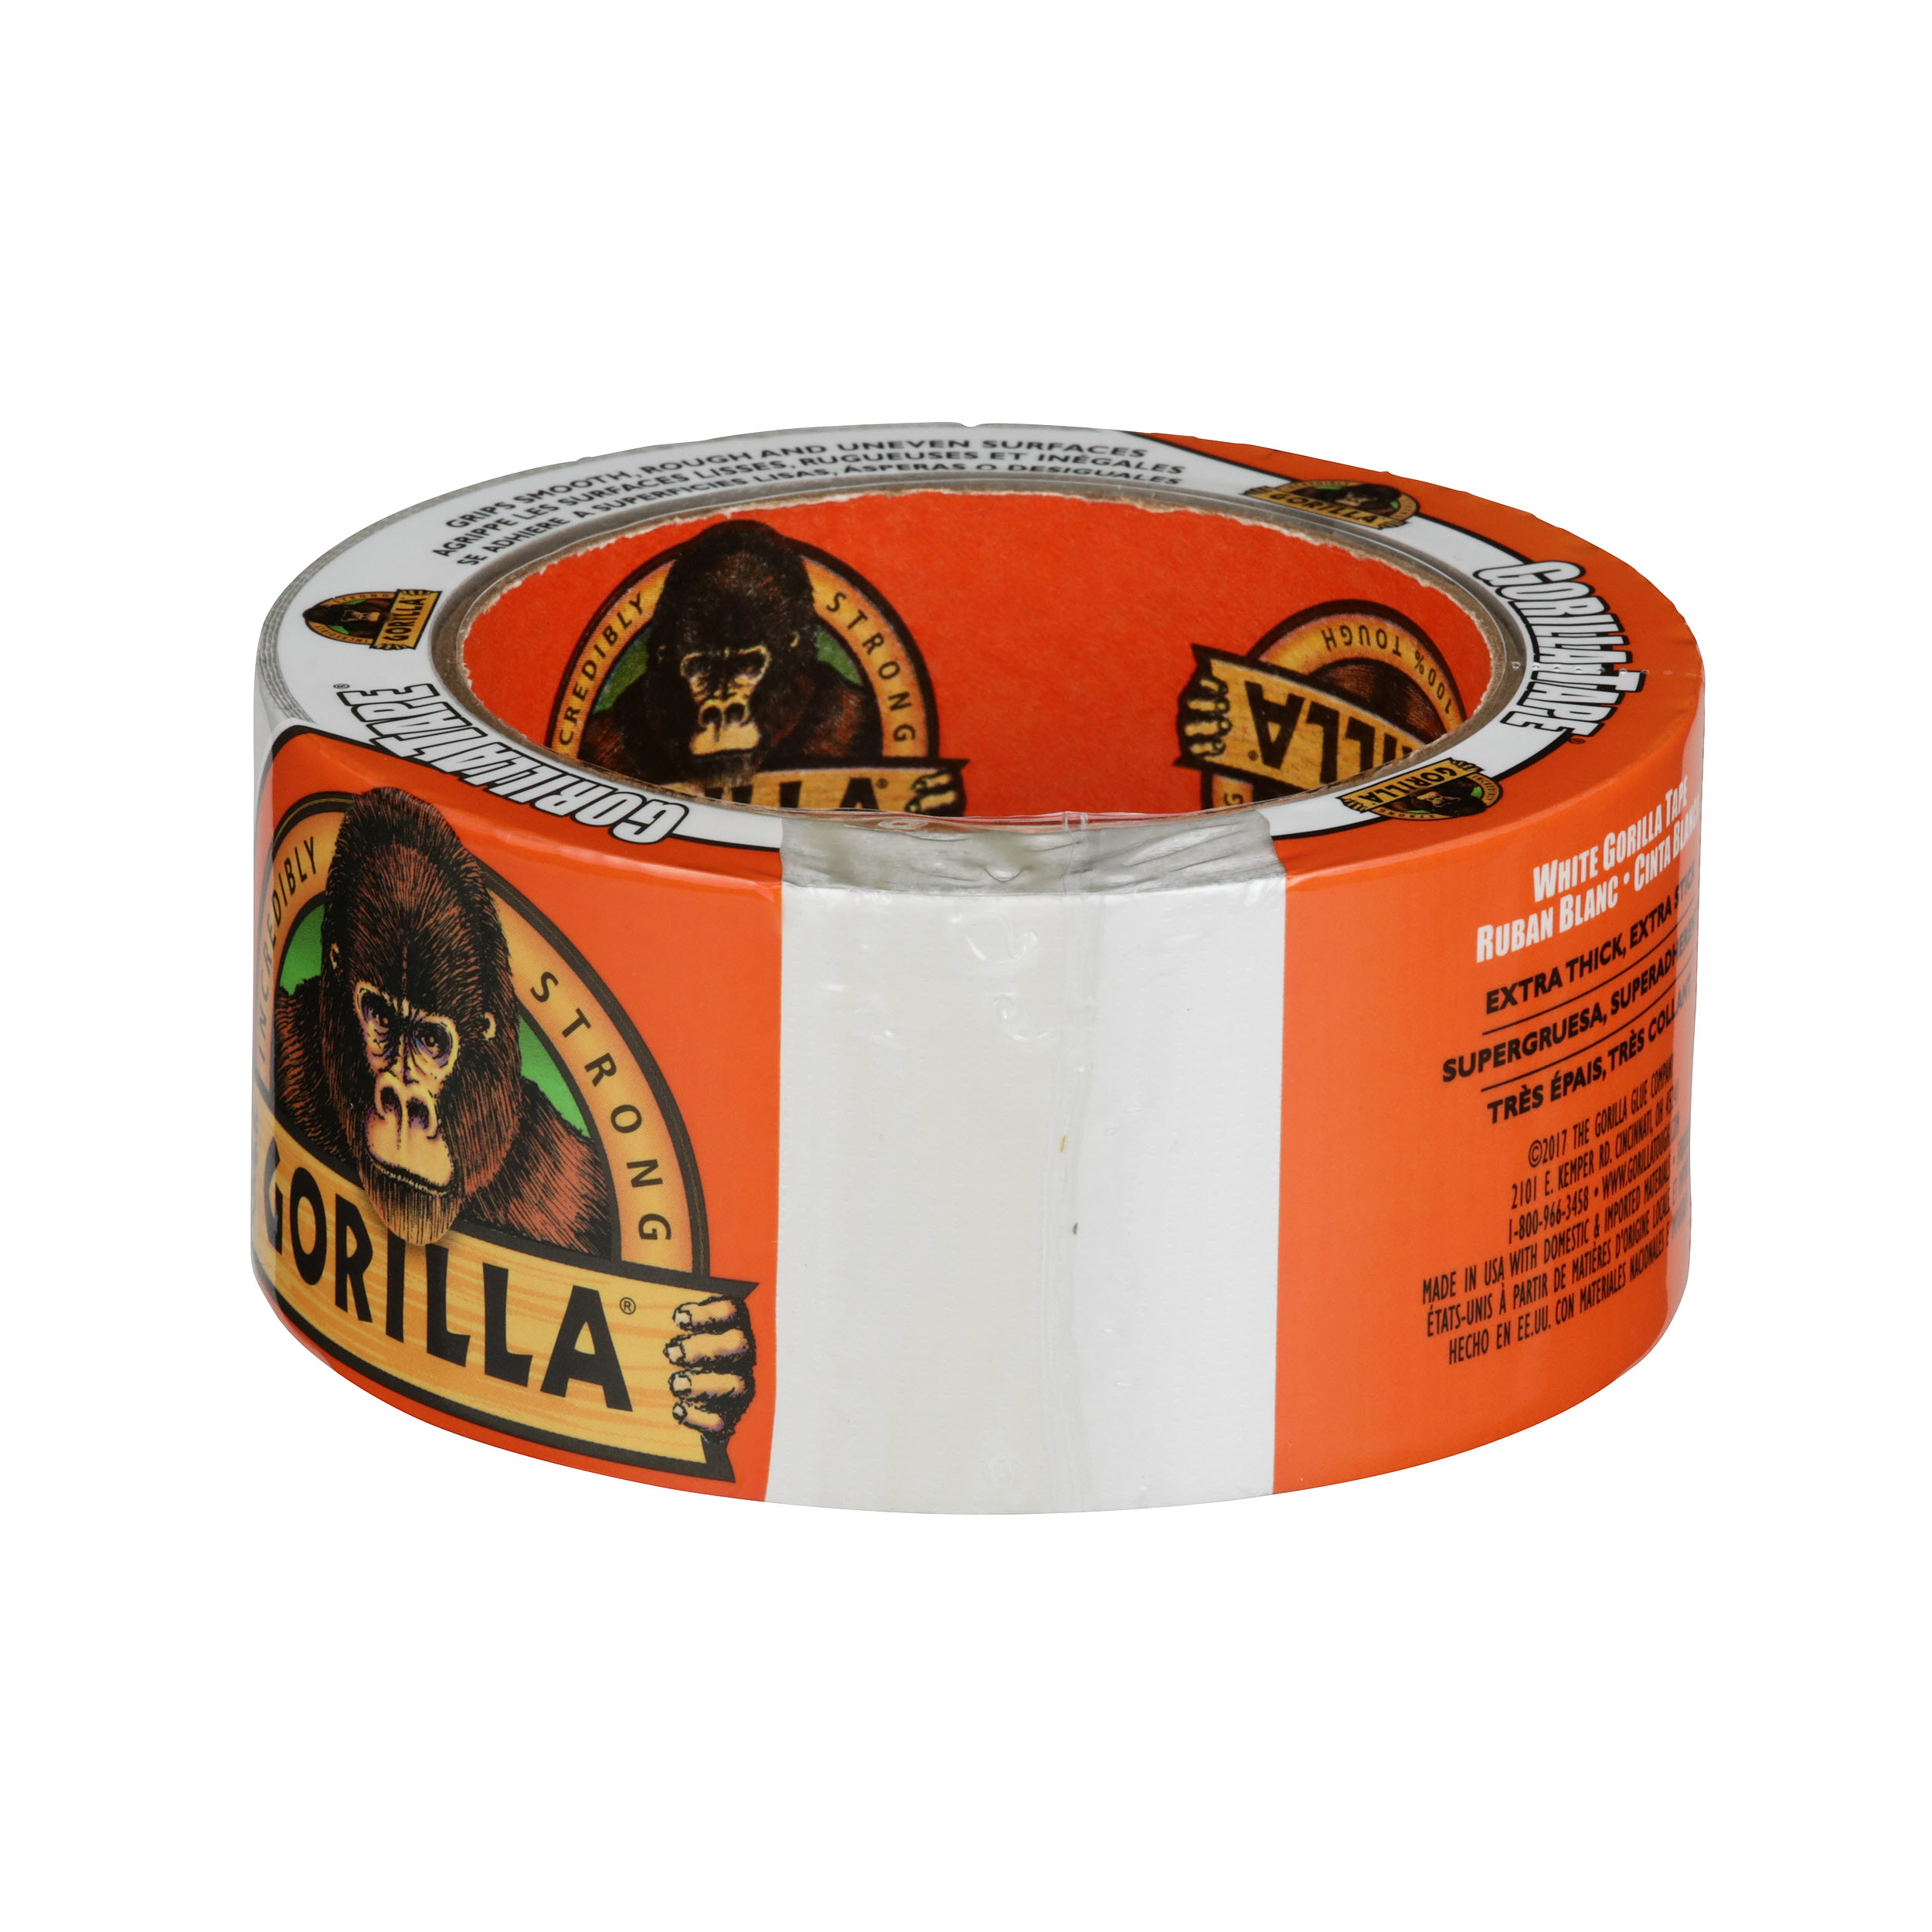 Gorilla White Tape Roll Gorilla tough Grips Smooth Rough Uneven Surfaces  10m 27m